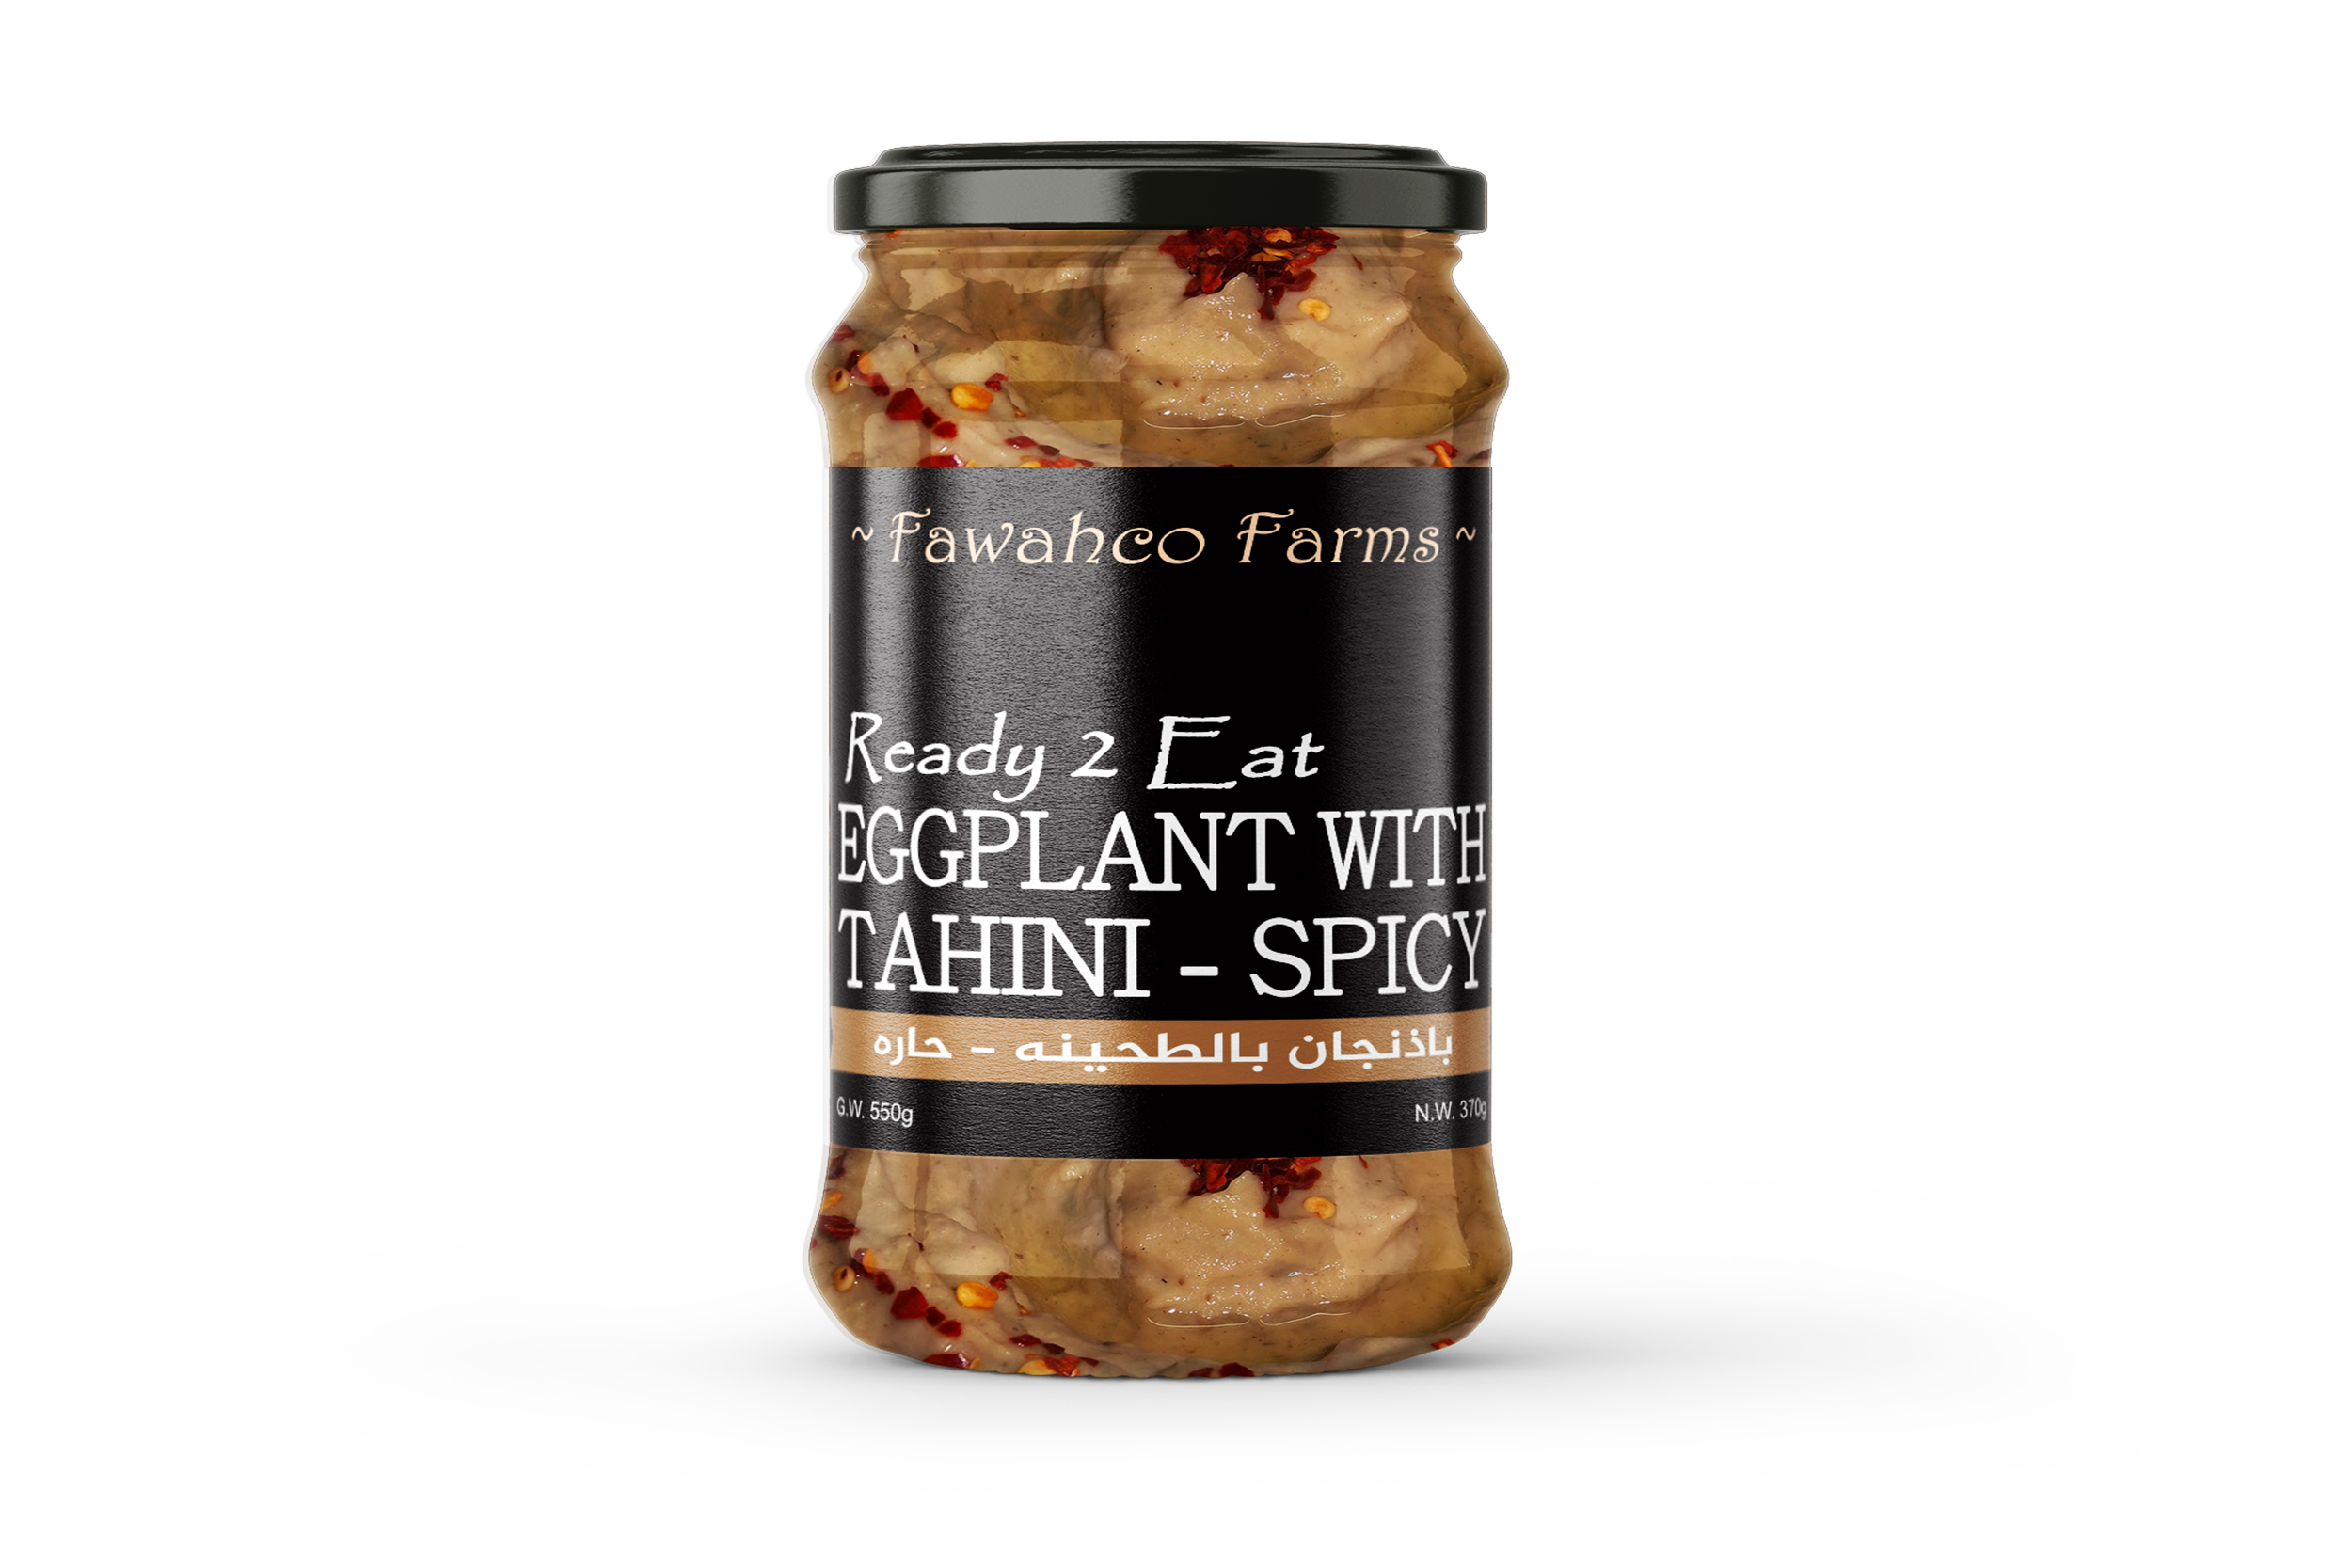 Eggplant With Tahini-Spicy